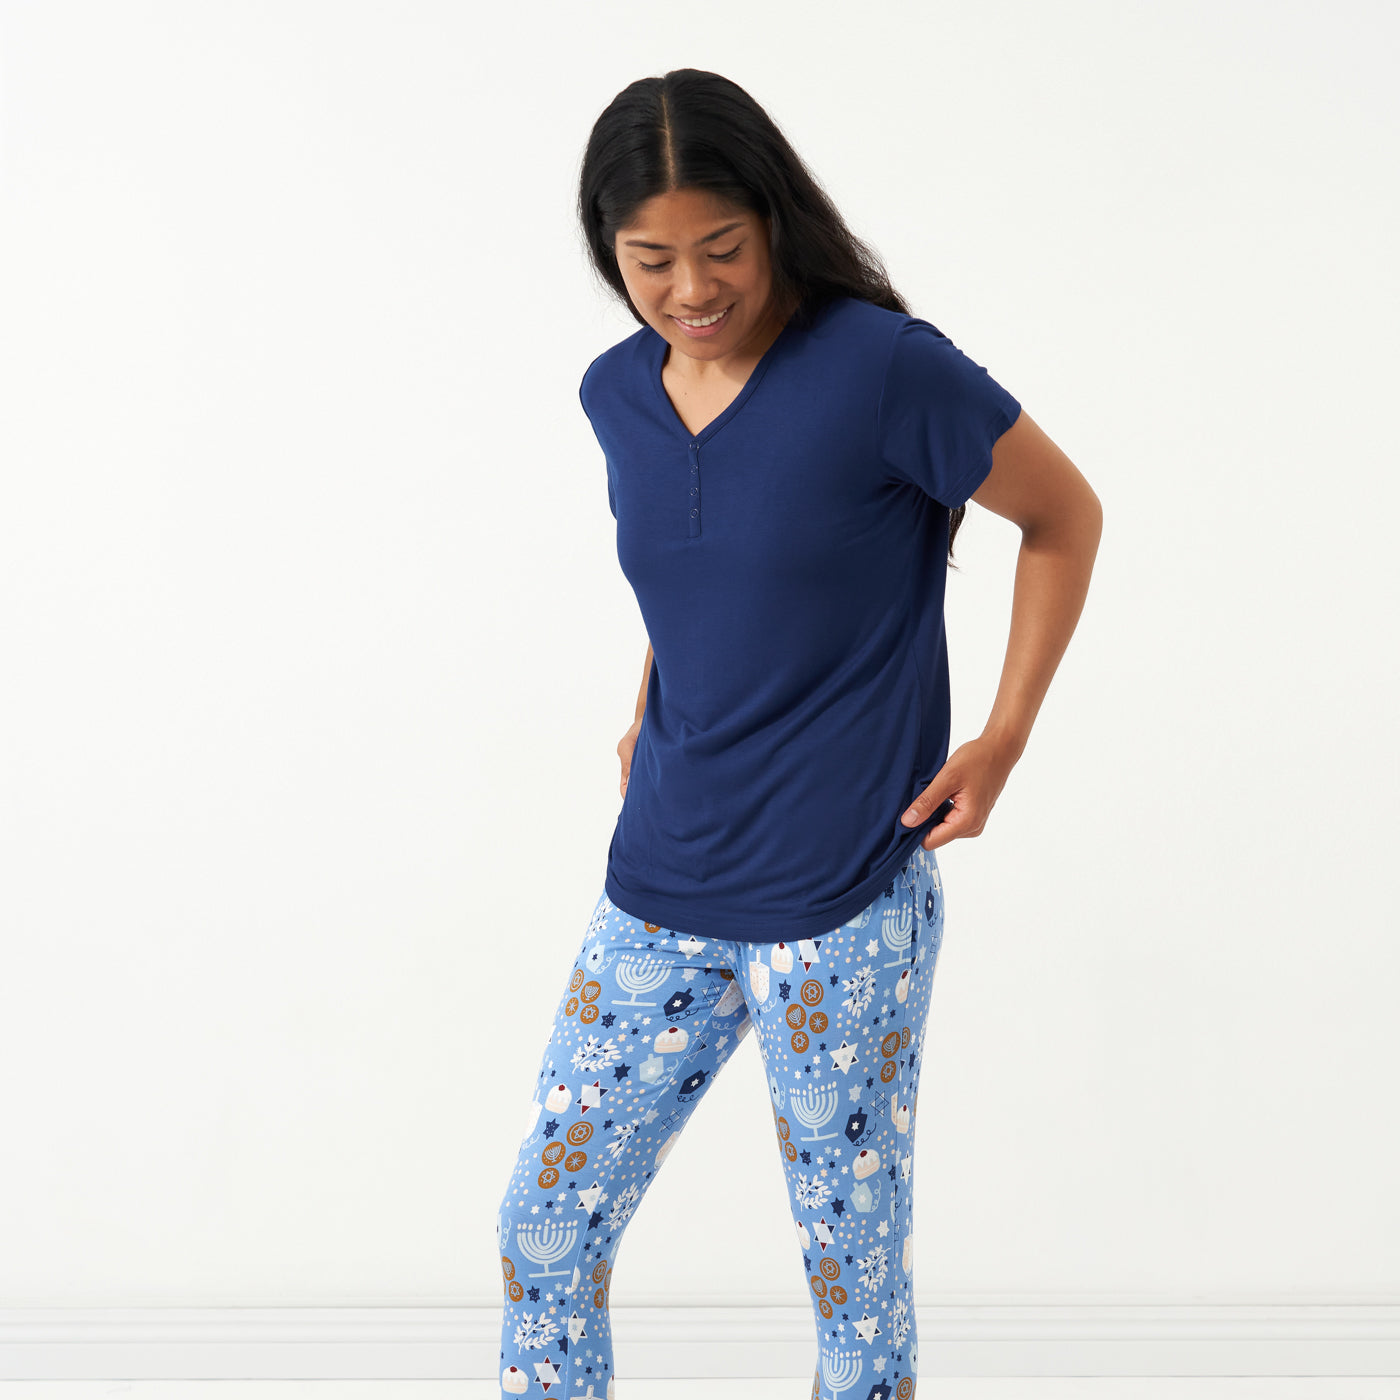 Women's SS PJ Tops - Sapphire Women's Short Sleeve Pajama Top